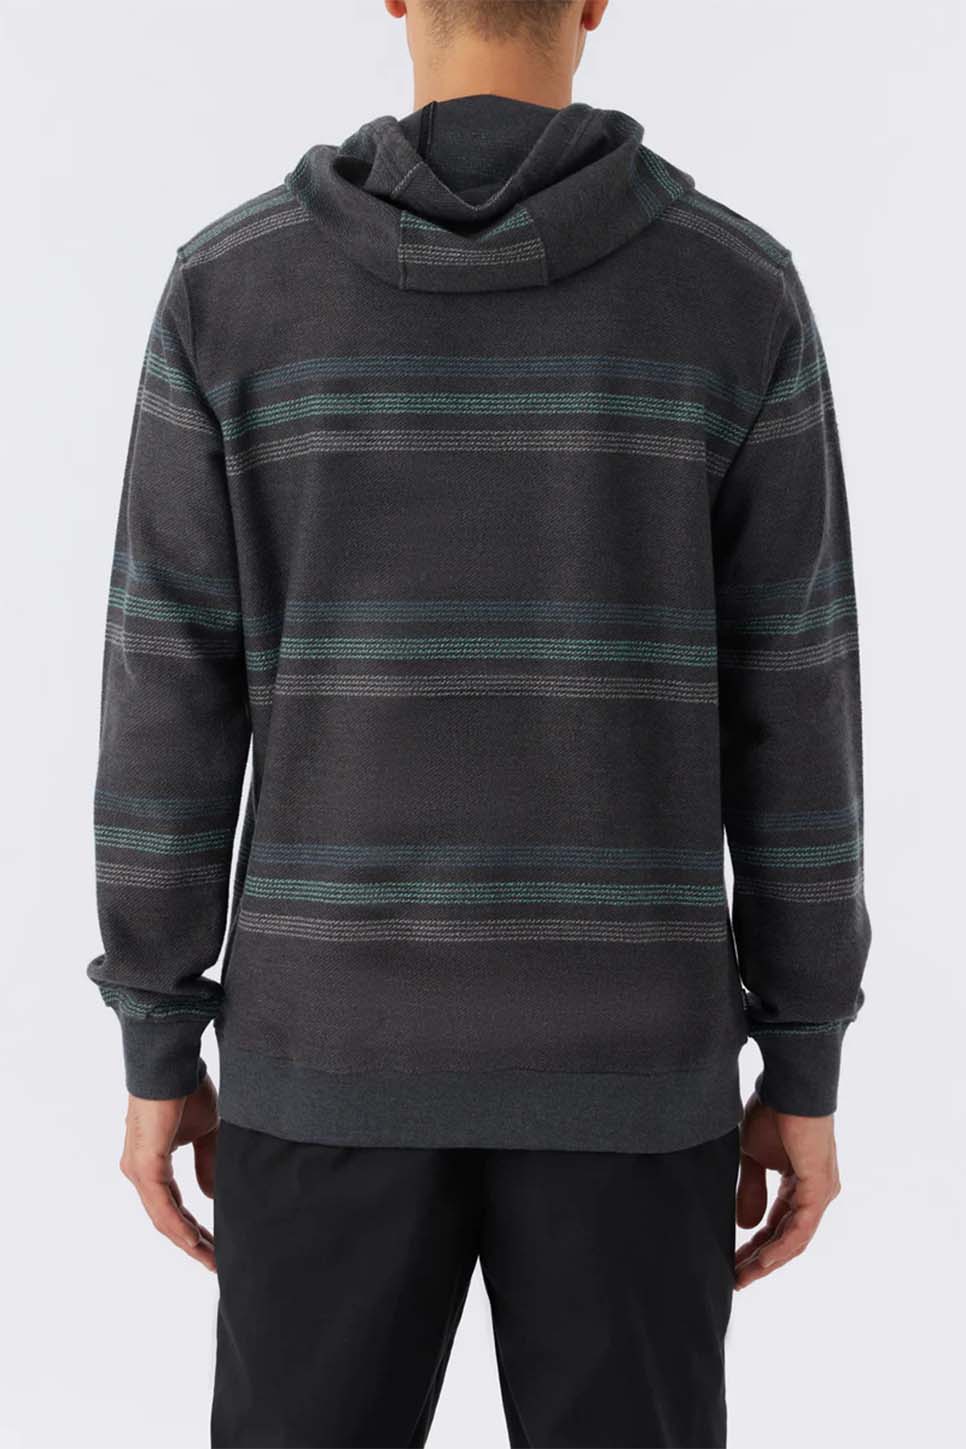 O'Neill - Bavaro Striped Pullover - Black 2 - Back